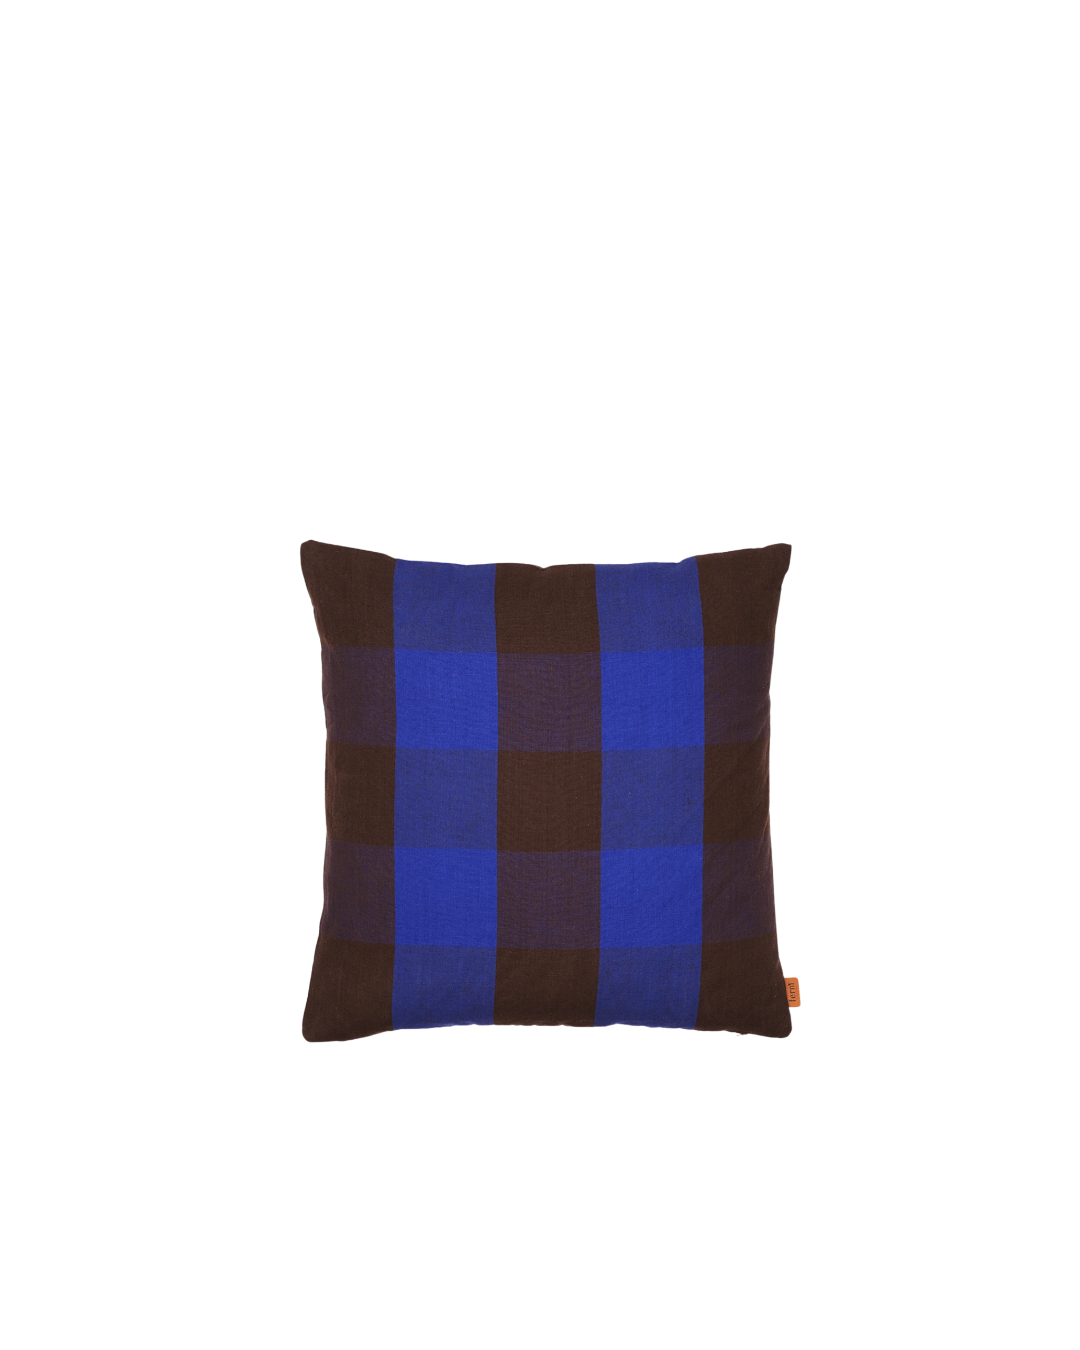 Grand Cushion: Chocolate/Bright Blue